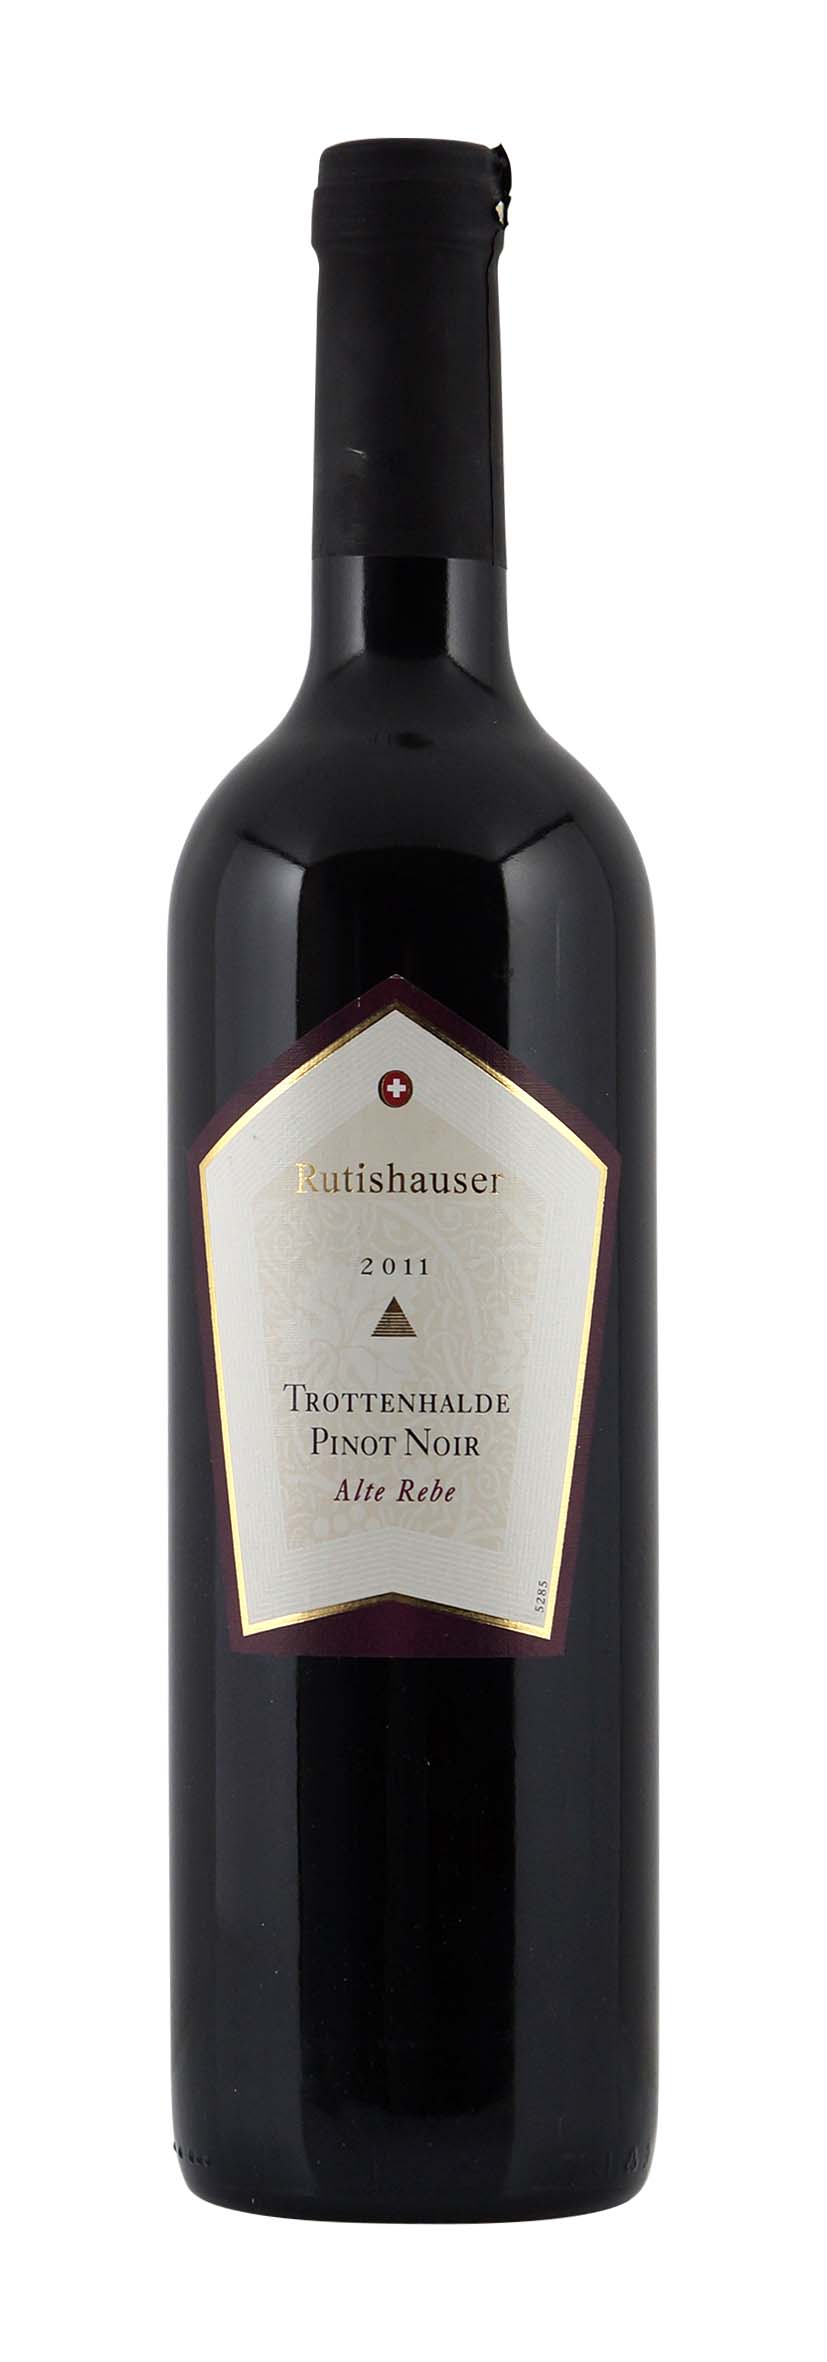 Thurgau AOC Pinot Noir Alte Rebe Trottenhalde 2011